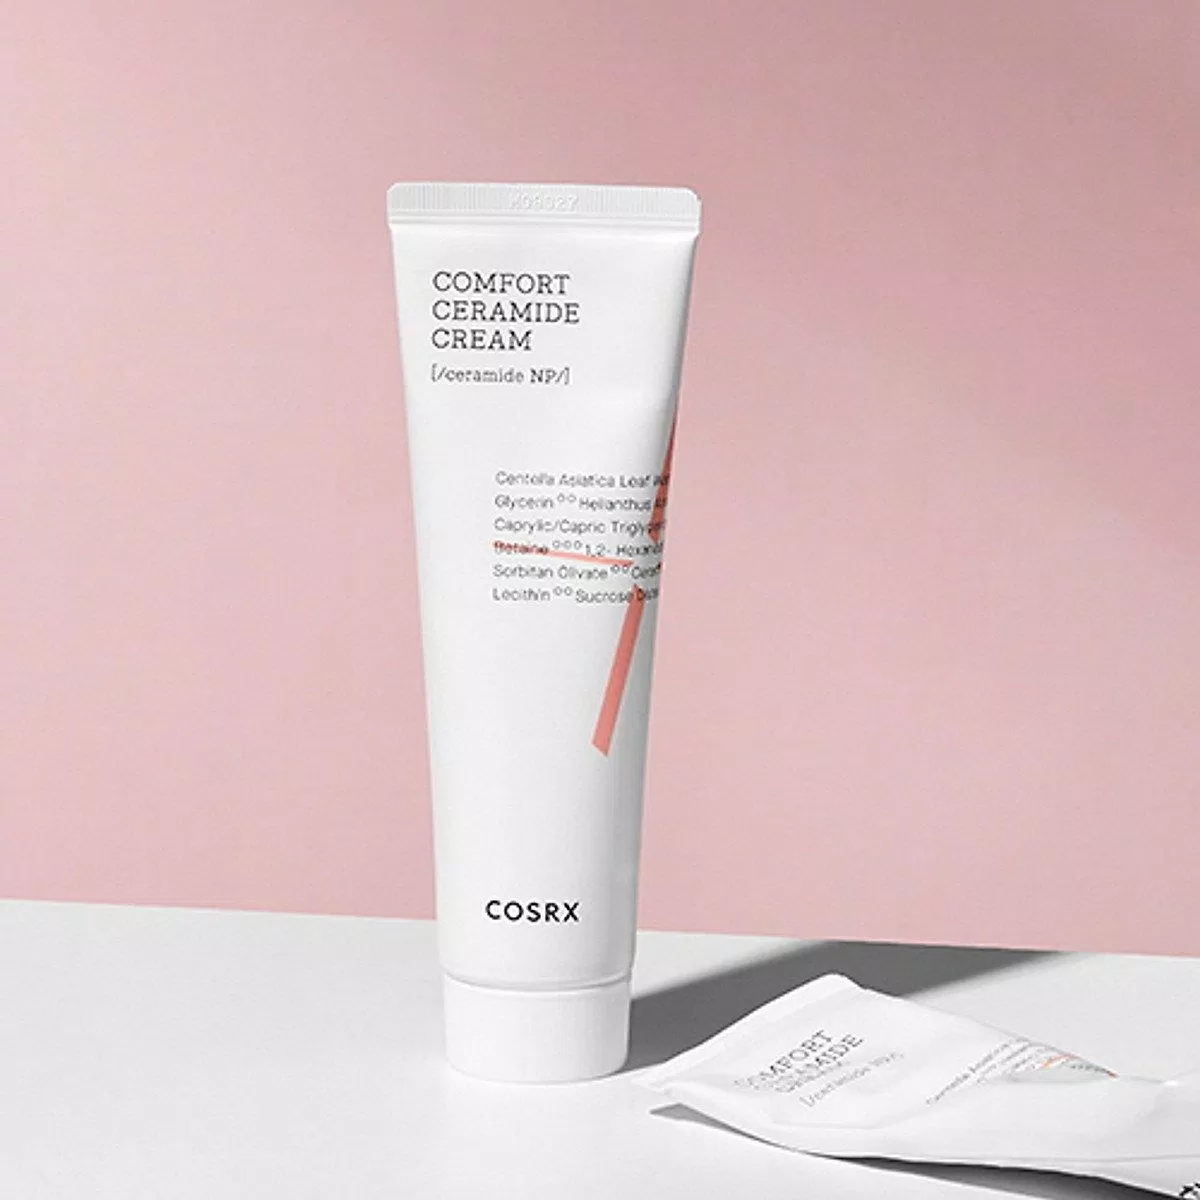 Kem dưỡng ẩm phục hồi da và chống lão hóa Cosrx Comfort Ceramide Cream (ảnh: internet)